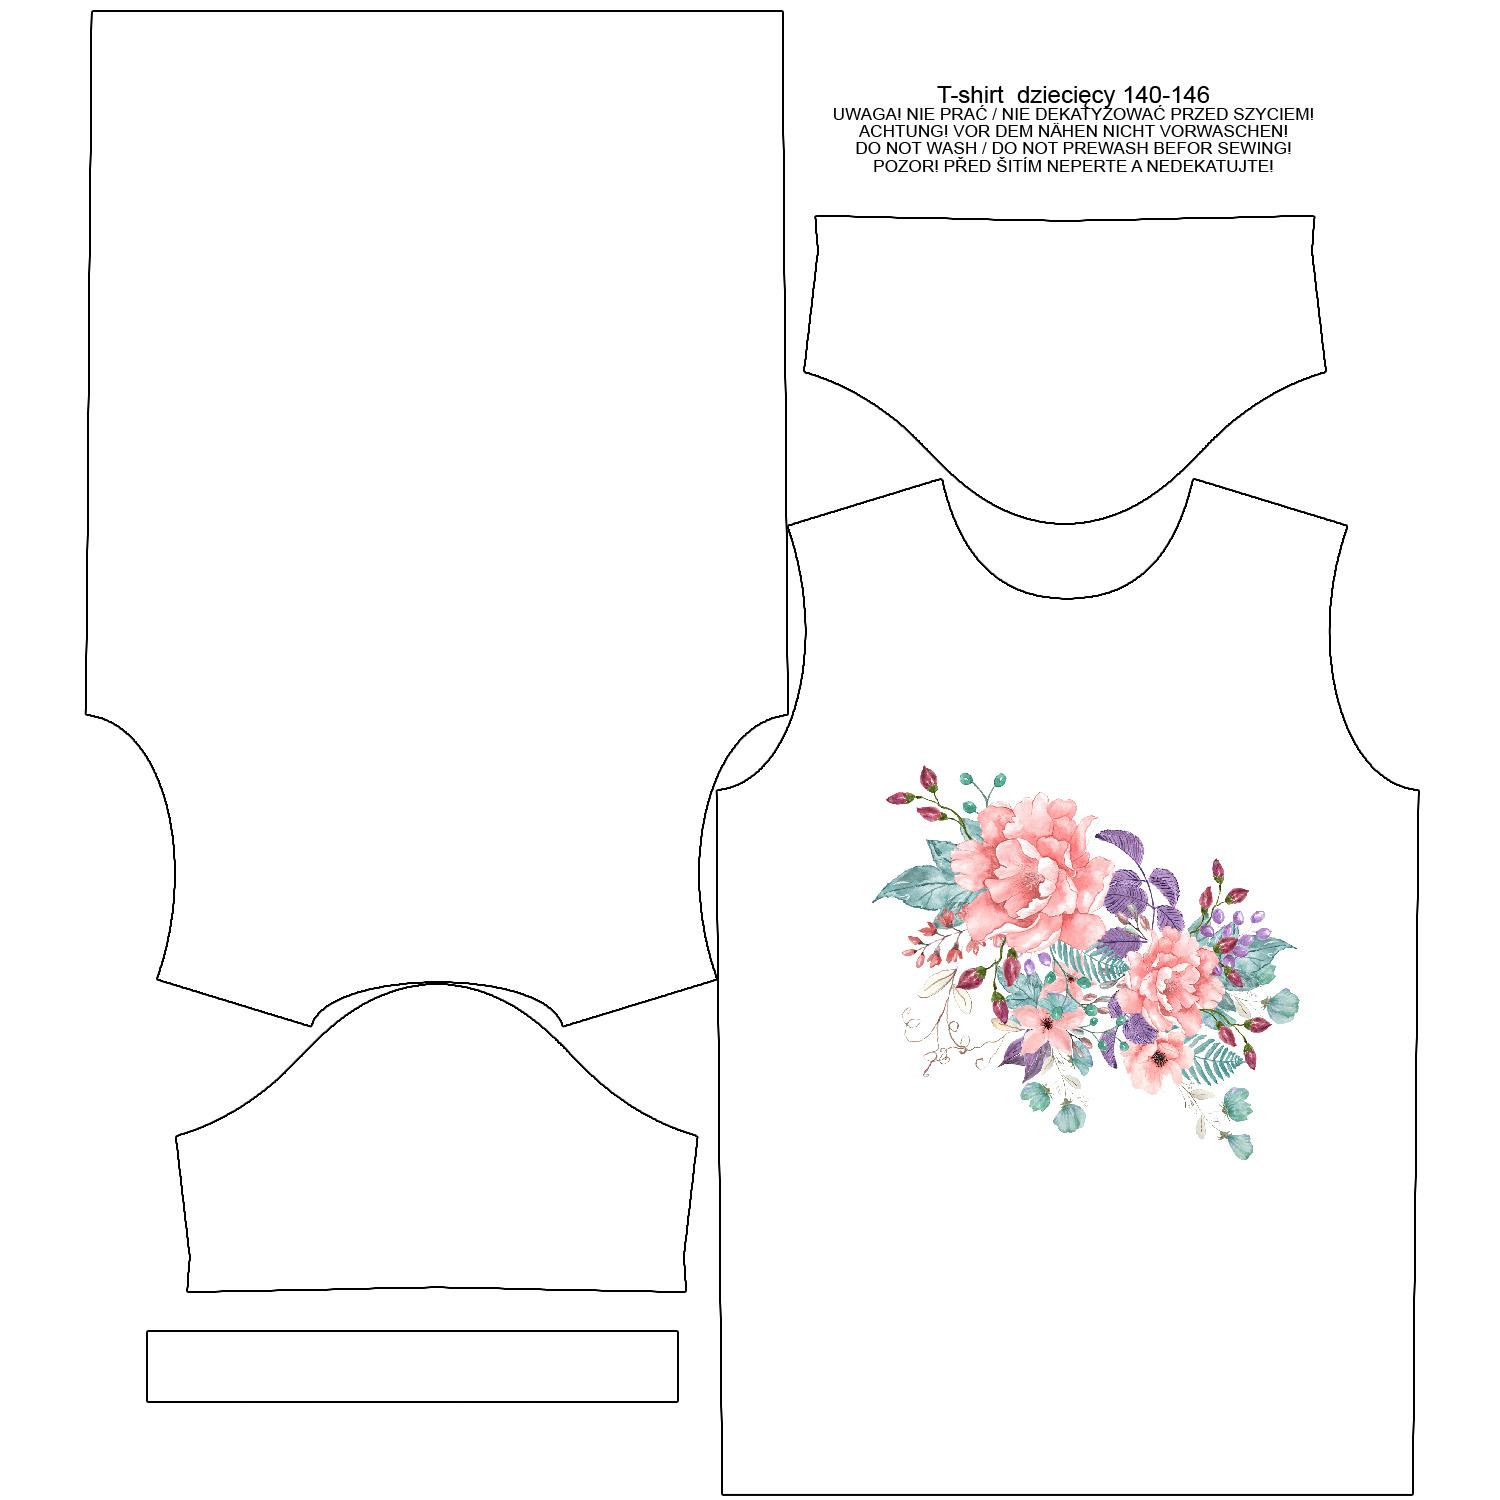 KID’S T-SHIRT - WILD ROSE FLOWERS PAT. 1 (BLOOMING MEADOW) - single jersey